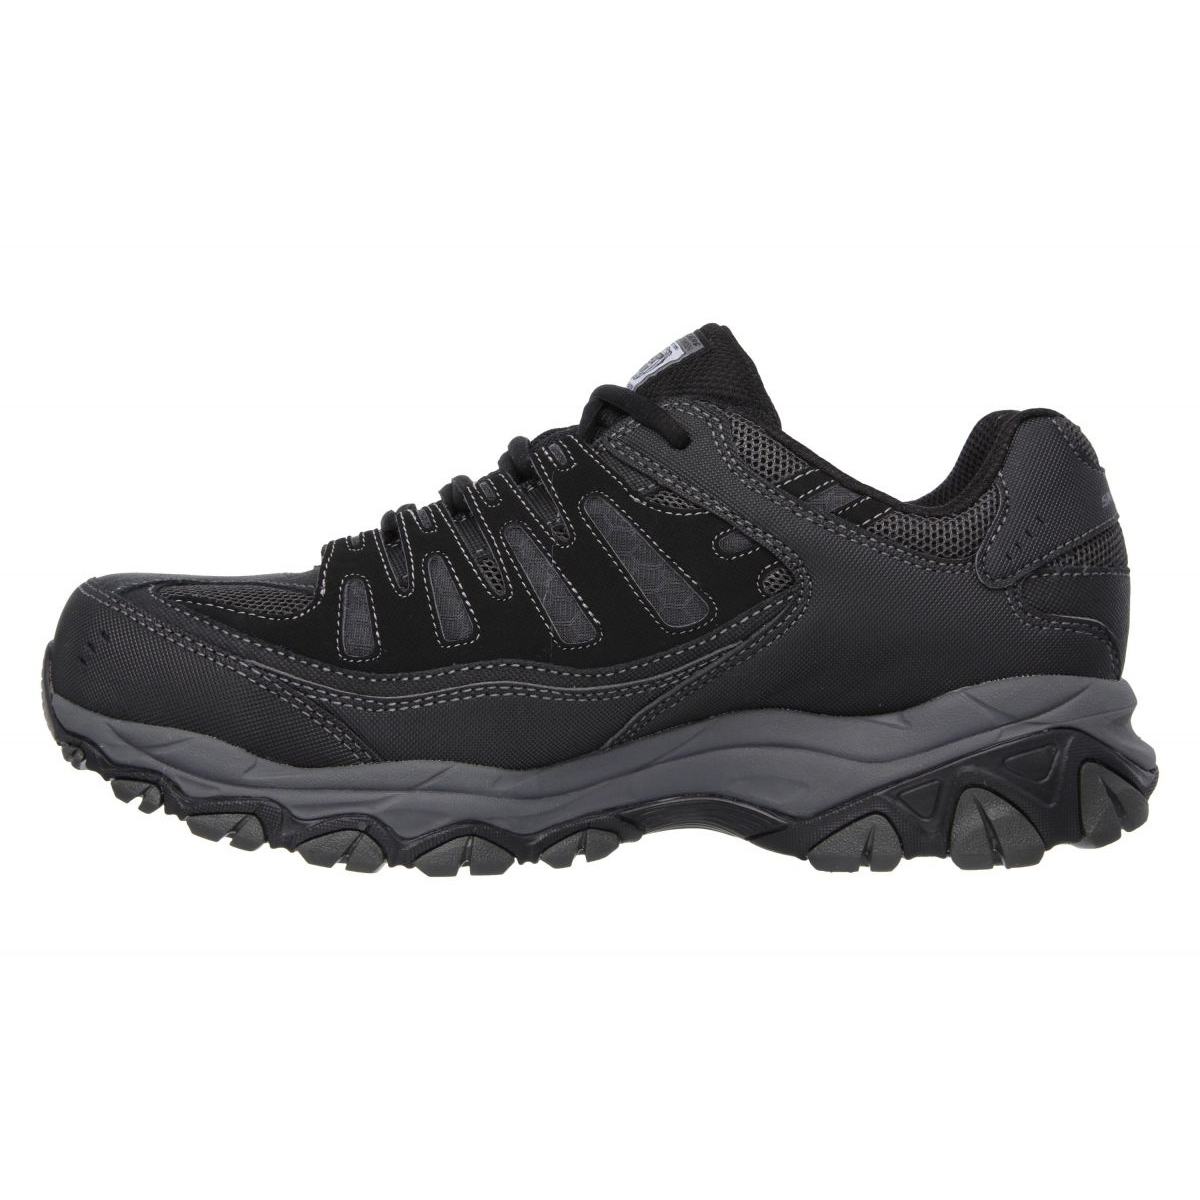 Skechers Men's Cankton-U Industrial Shoe 7 BLACK/CHARCOAL - BLACK/CHARCOAL, 14-W